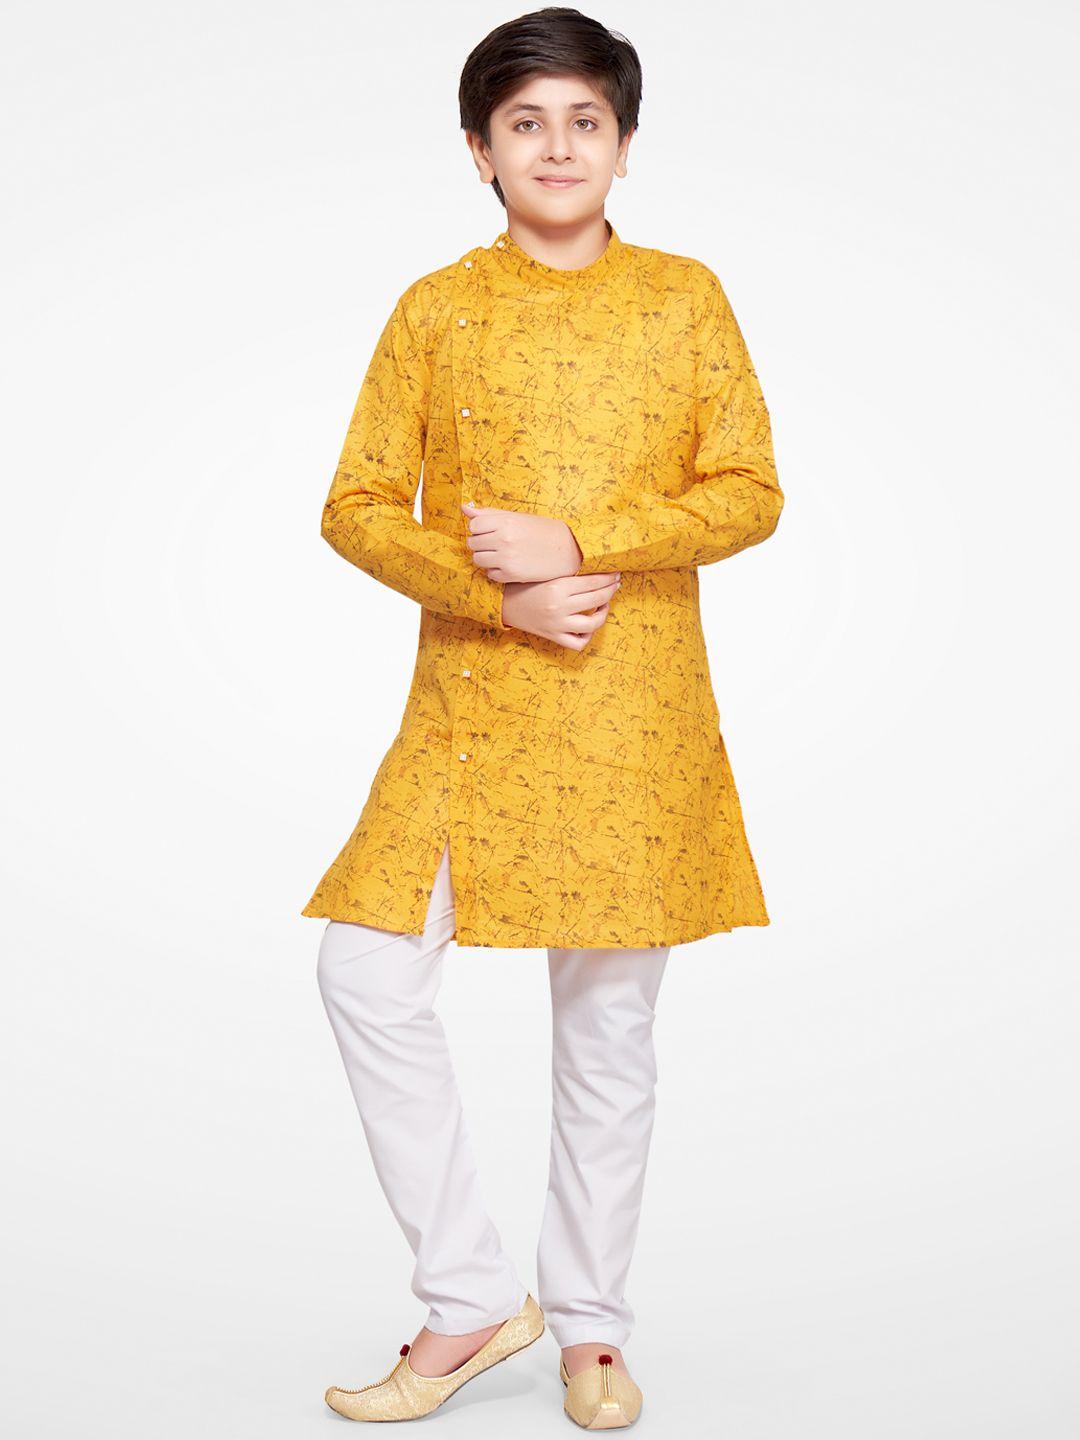 jeetethnics-boys-yellow-floral-printed-angrakha-kurta-with-pyjamas